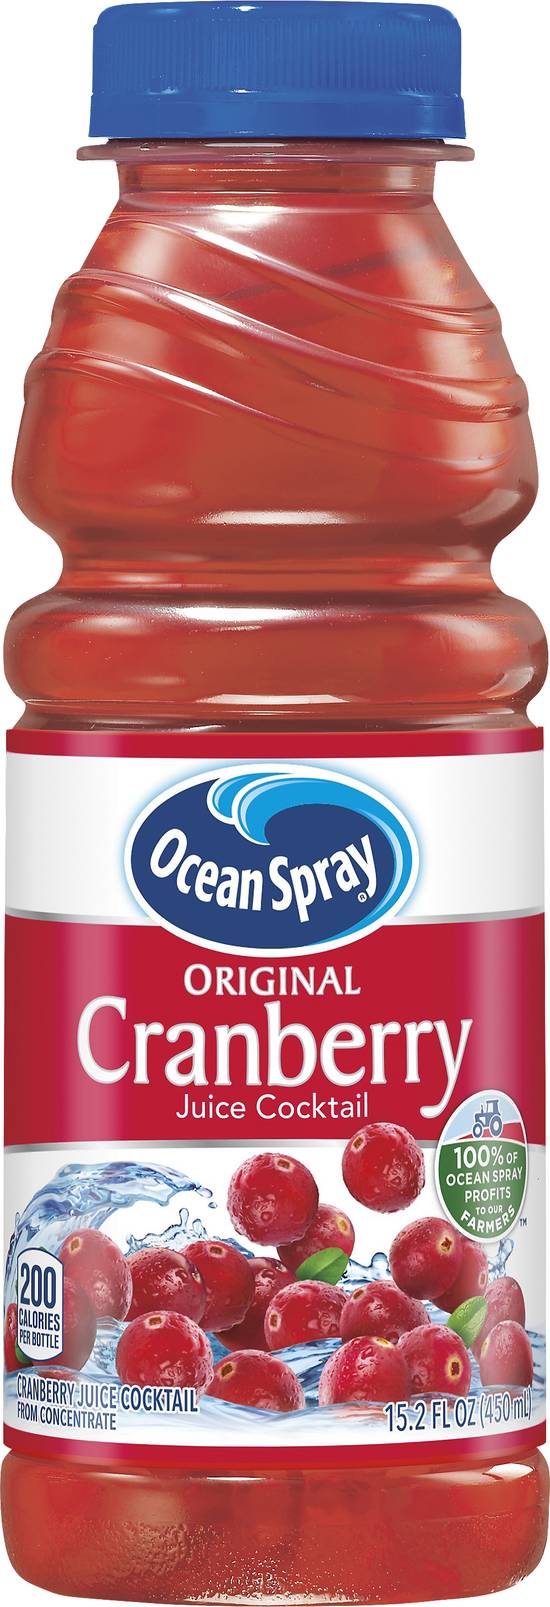 Ocean Spray Original Cranberry Juice Cocktail (15.2 fl oz)